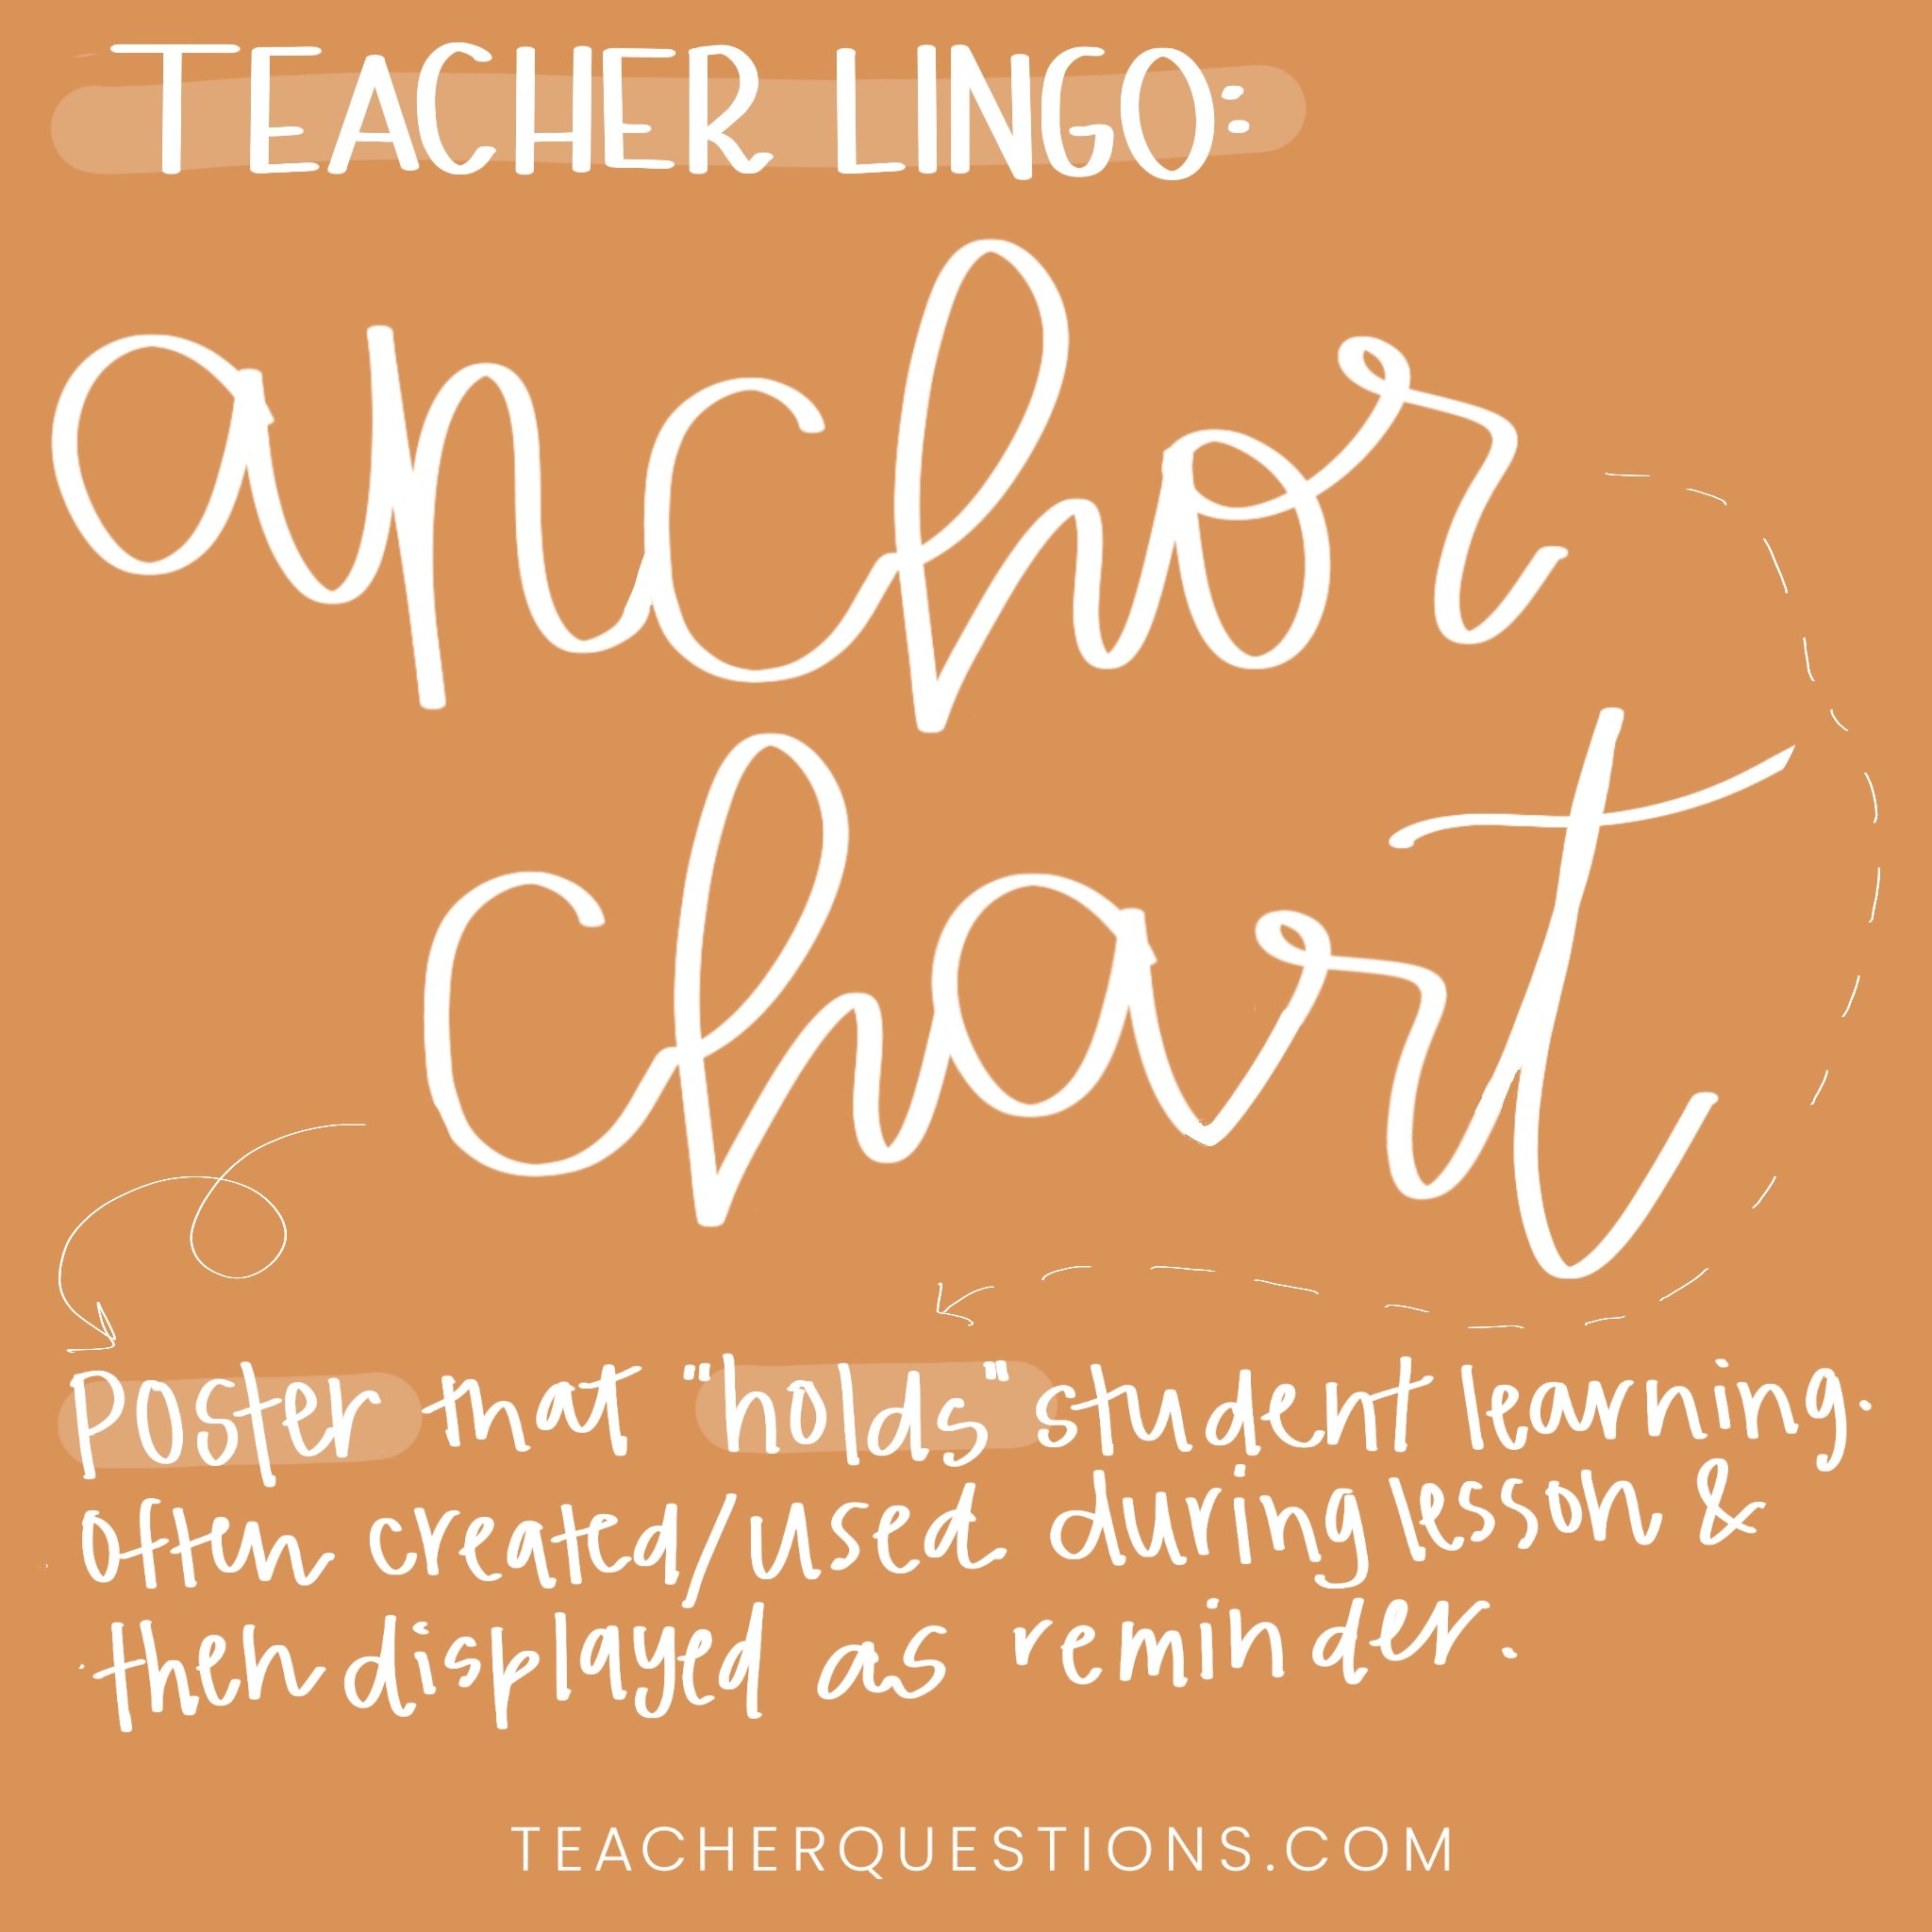 How do you make Pinterest-worthy anchor charts? — Teacher